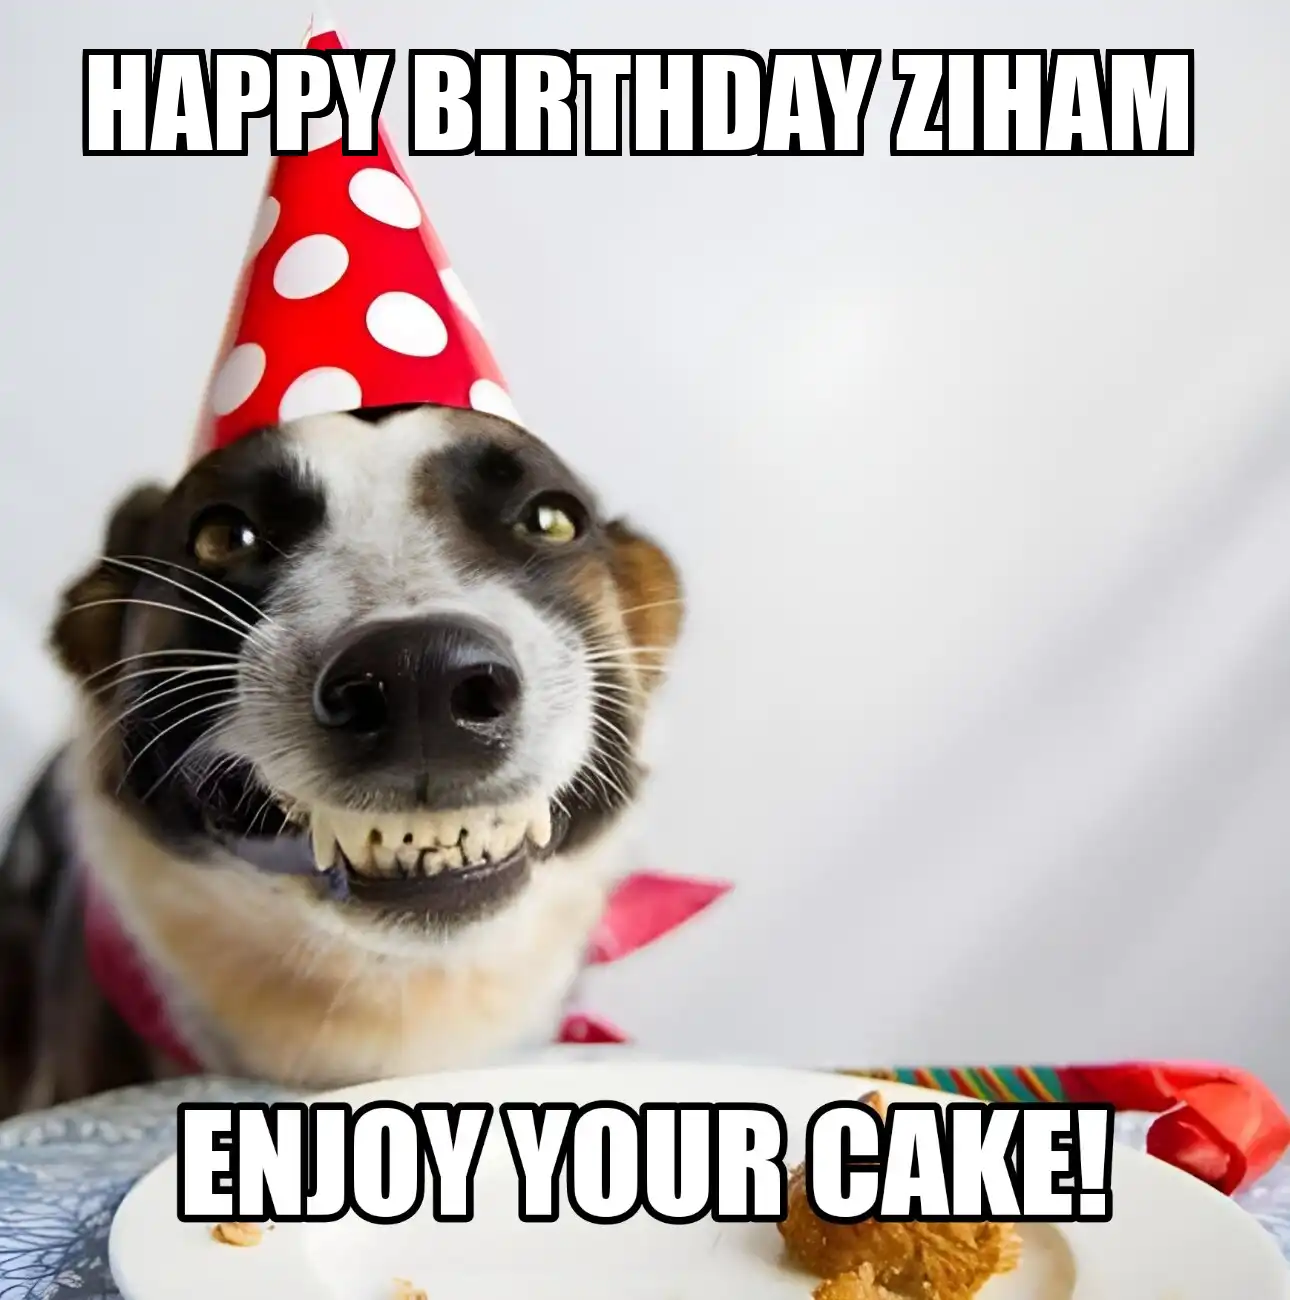 Happy Birthday Ziham Enjoy Your Cake Dog Meme